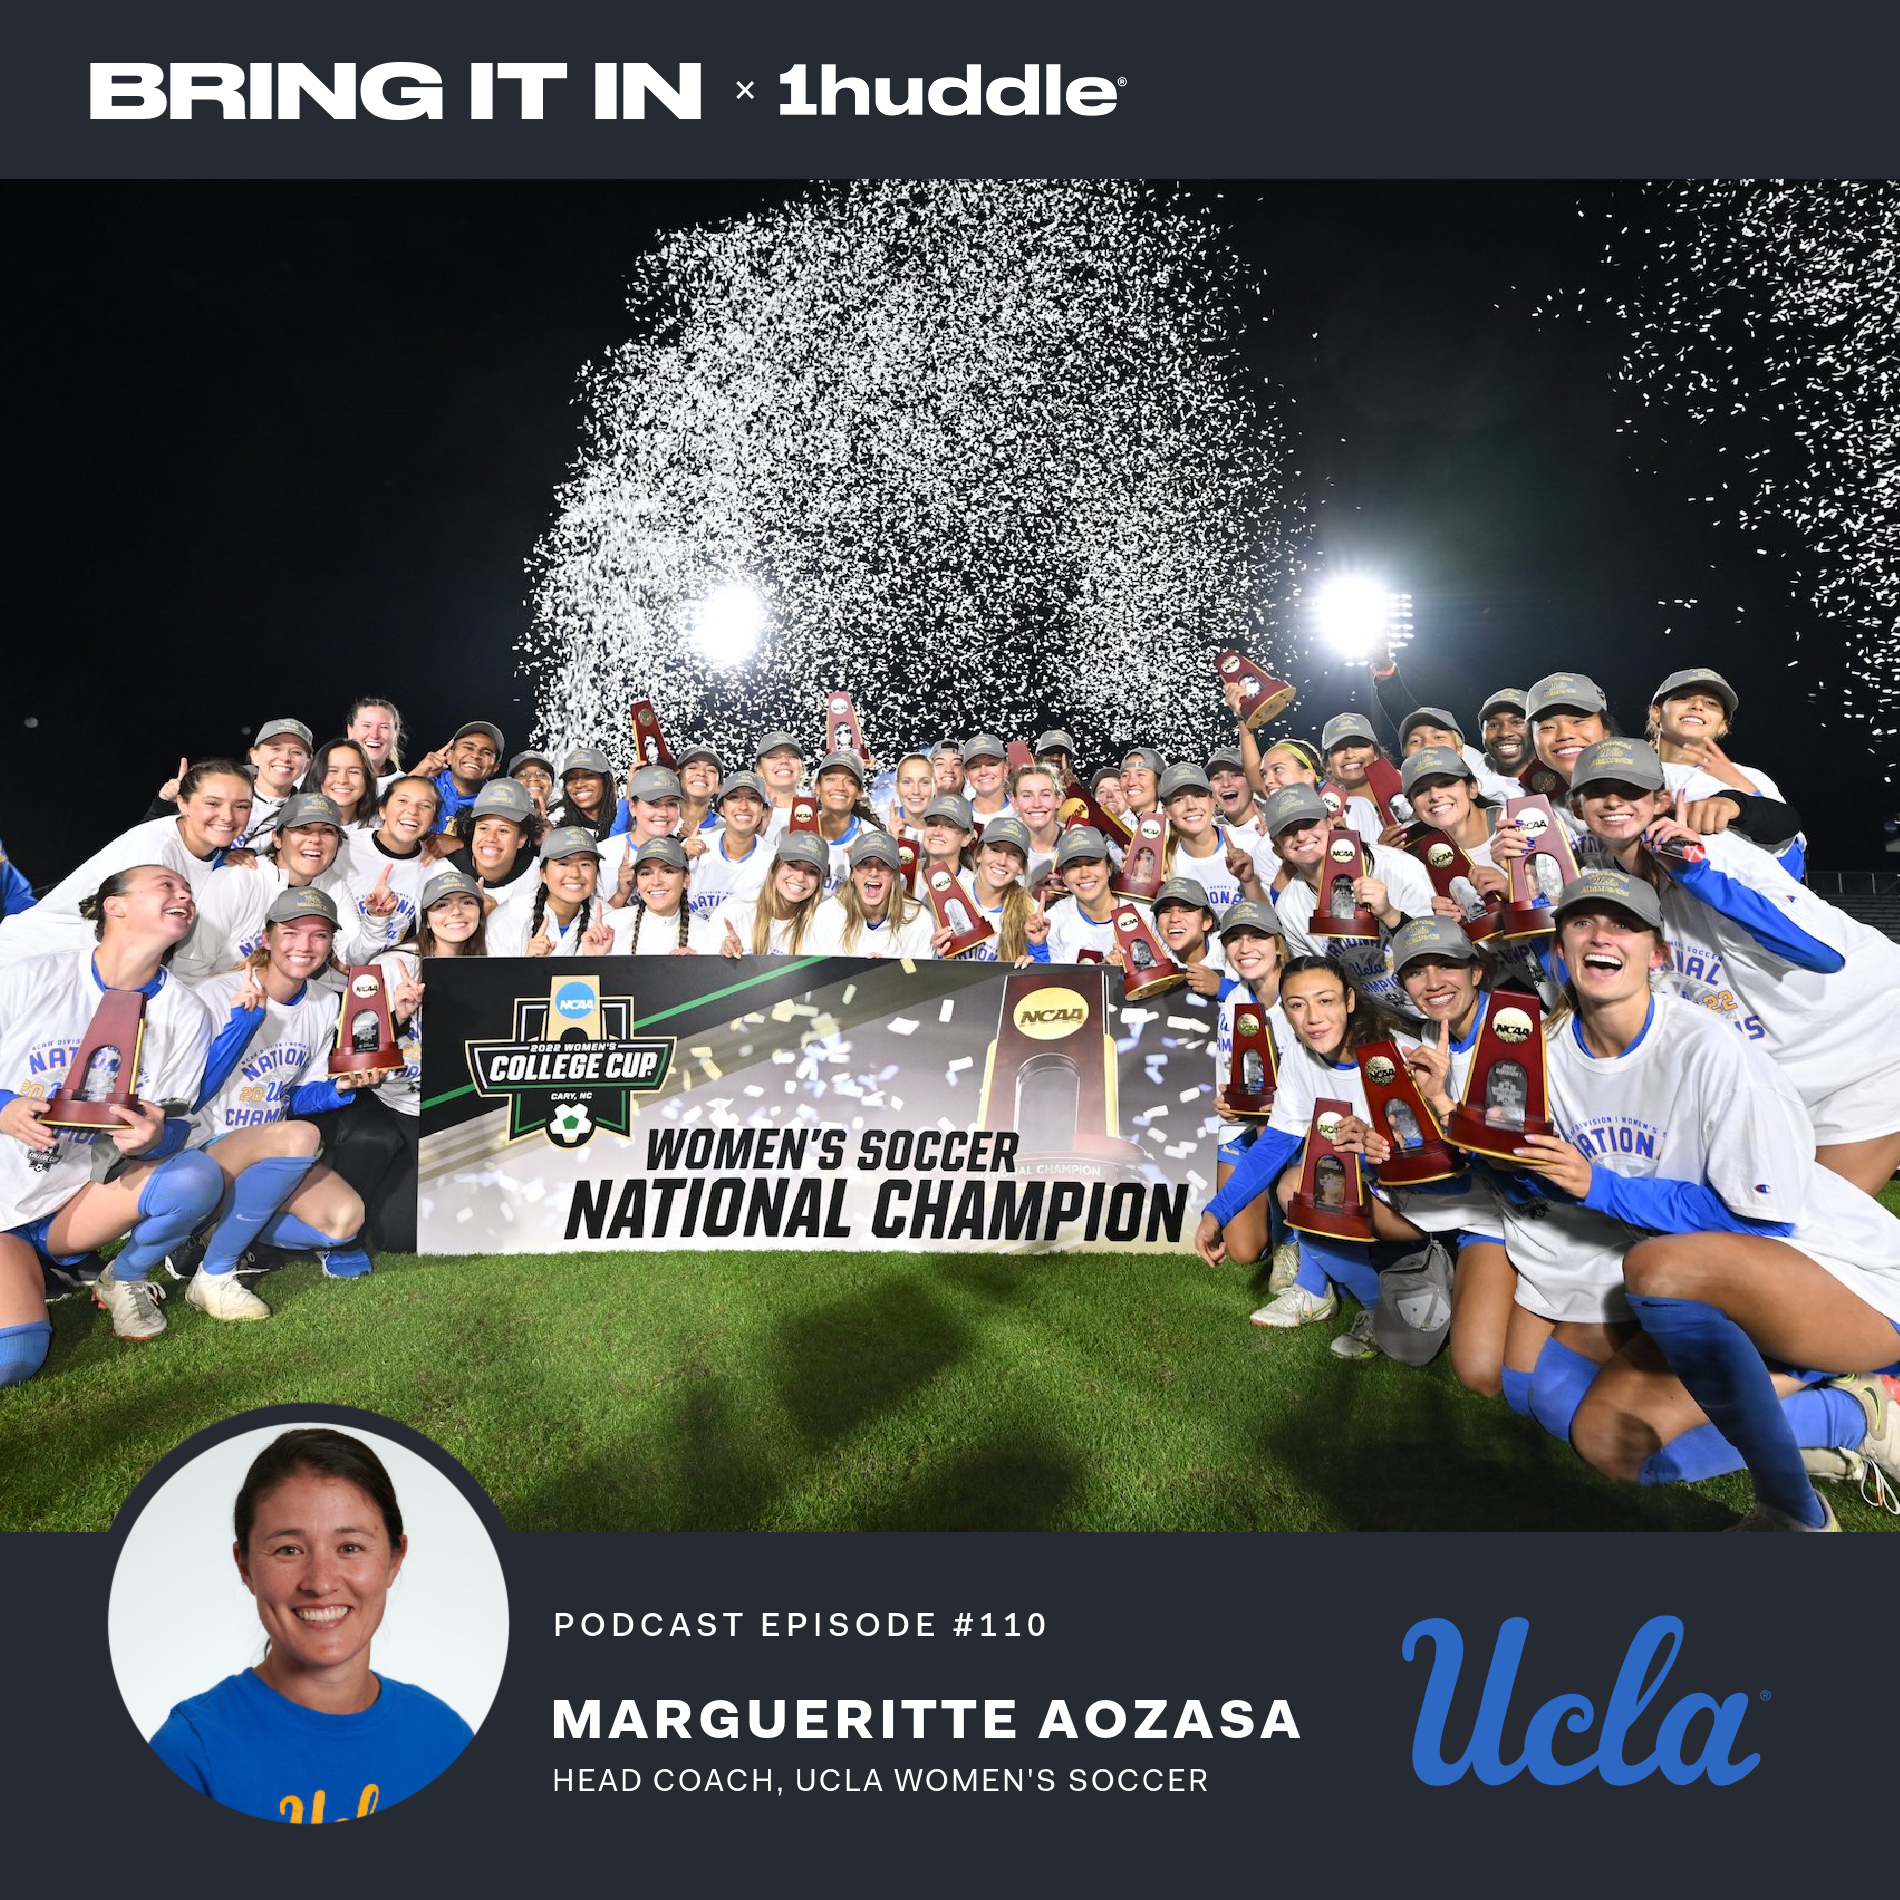 Head Women’s Soccer Coach at UCLA, 2x NCAA National Champion